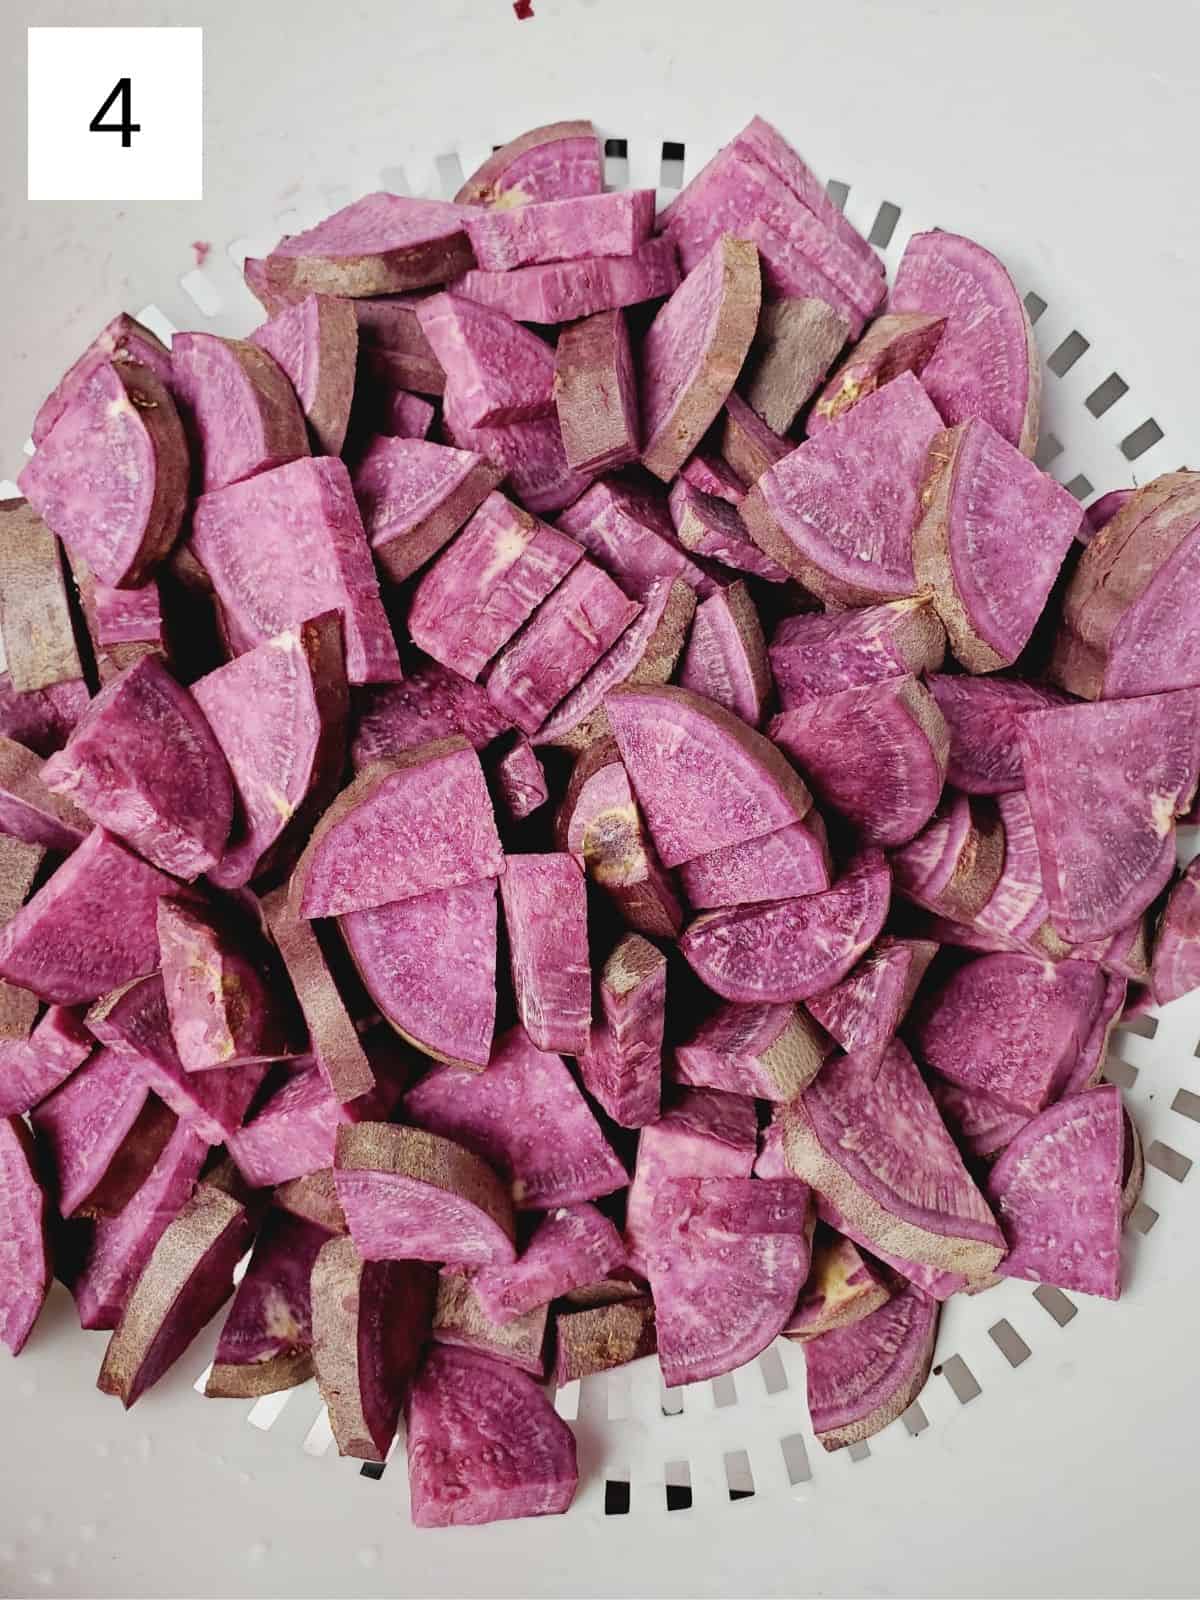 purple sweet potato slices in a white strainer.